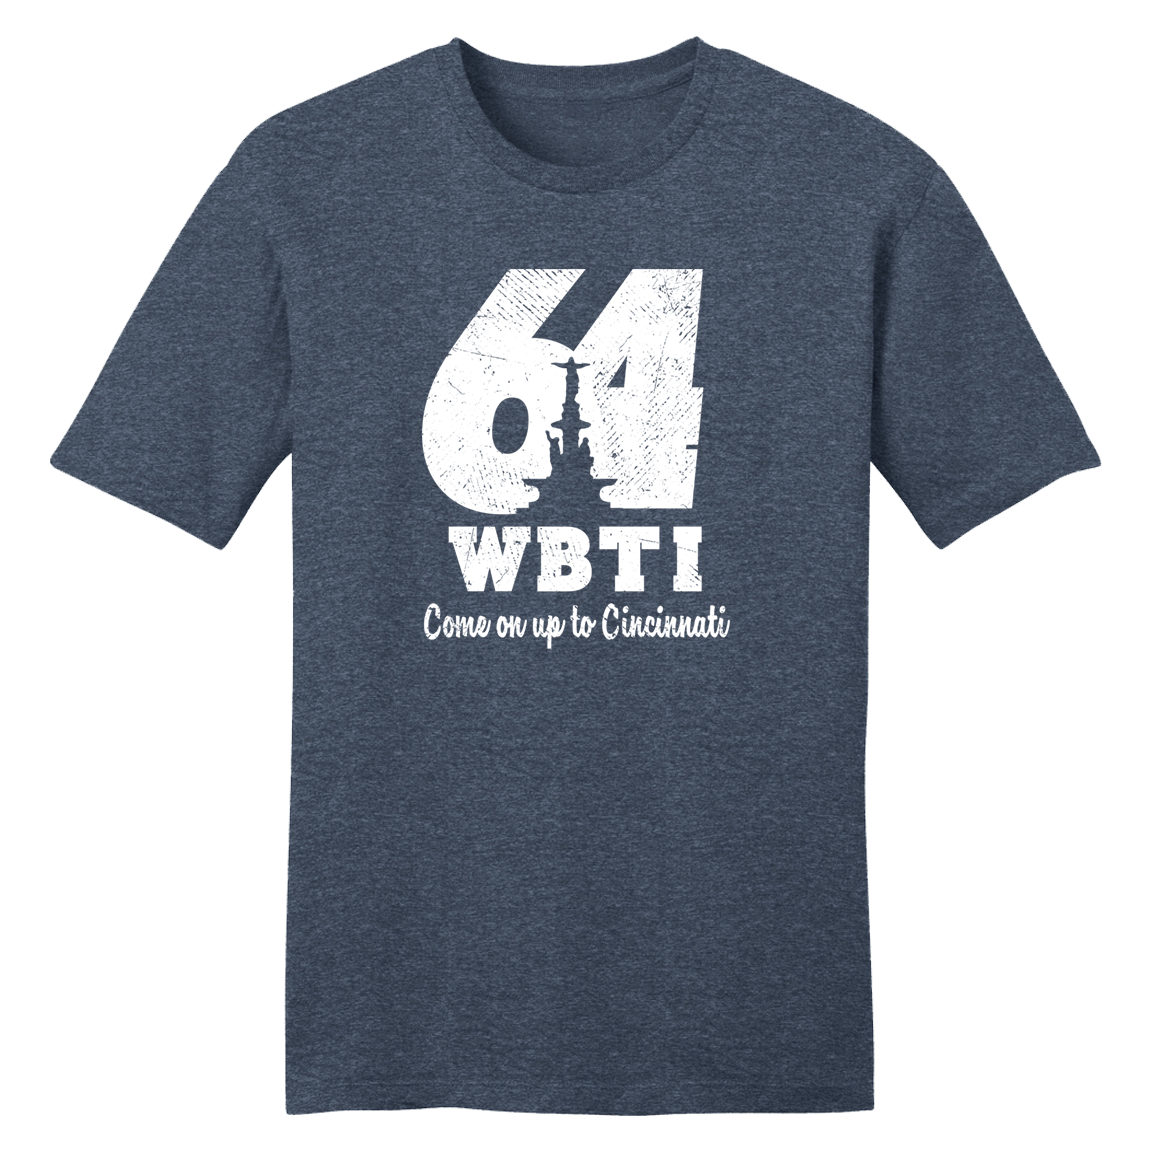 WBTI Channel 64 tee